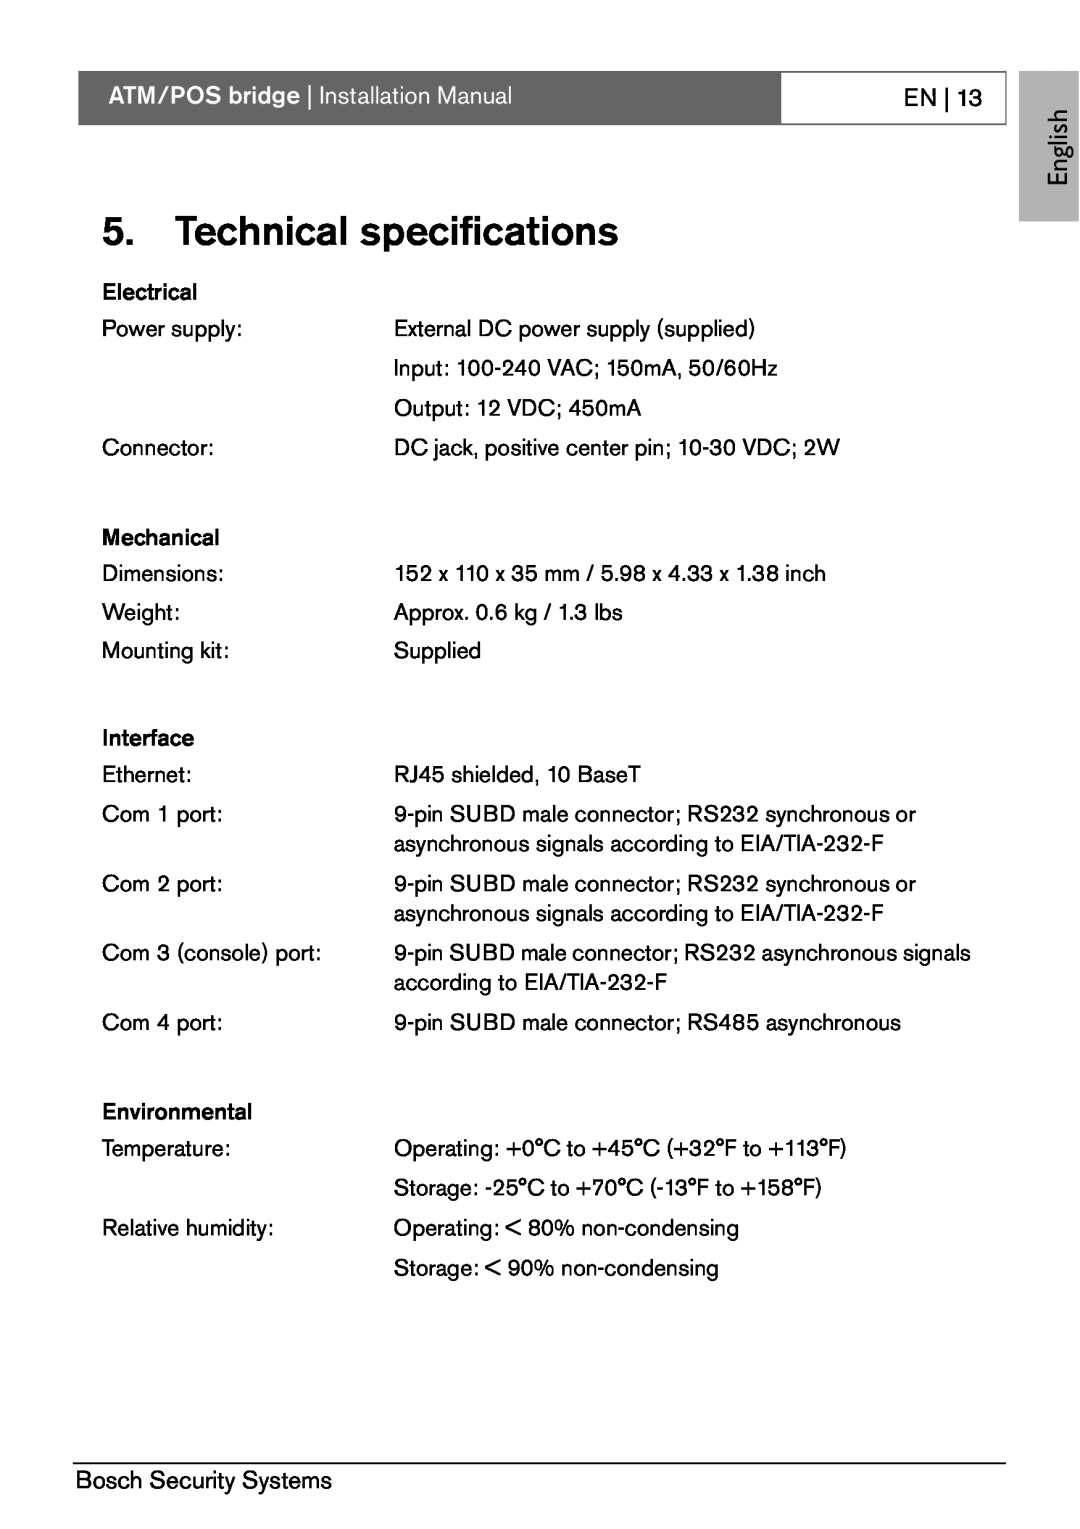 Bosch Appliances ATM/POS Bridge installation manual Technical specifications, English, ATM/POS bridge Installation Manual 